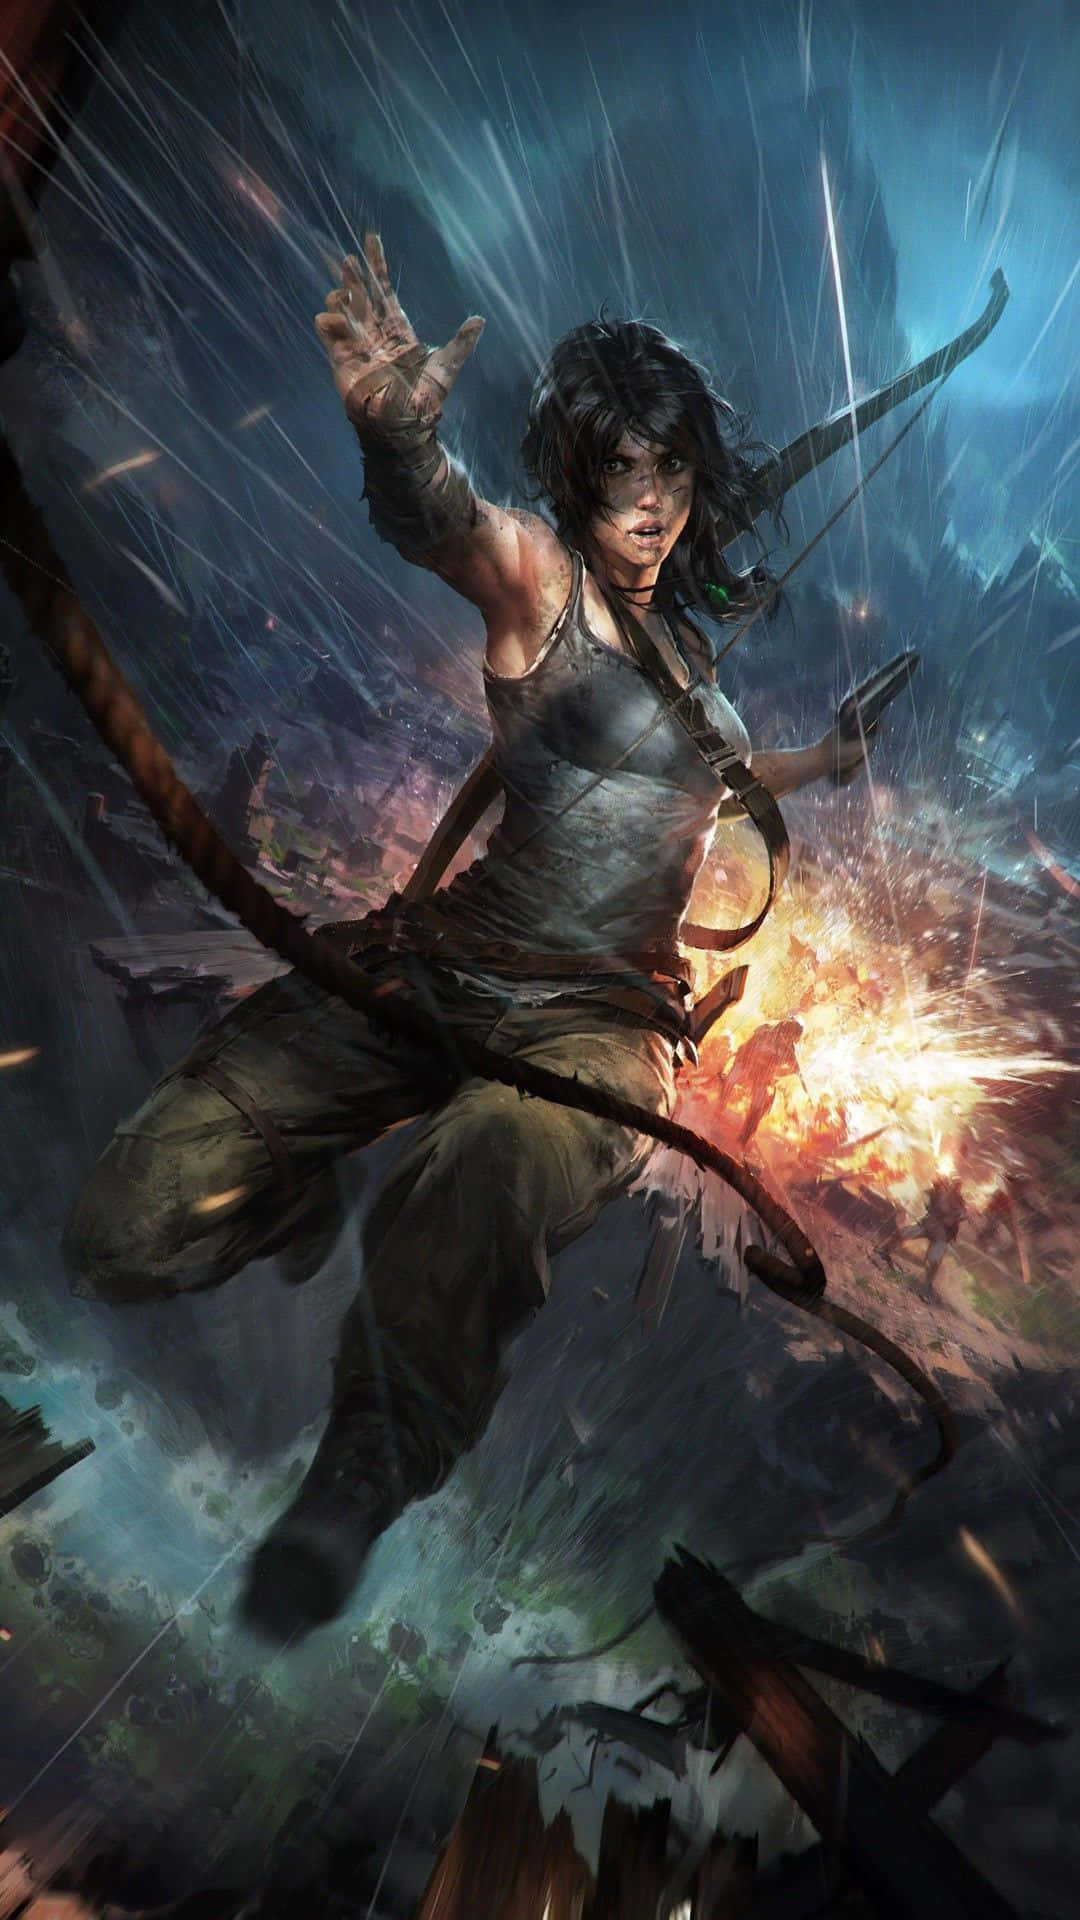 Revisit Lara Croft’s World on Your Tomb Raider Phone Wallpaper